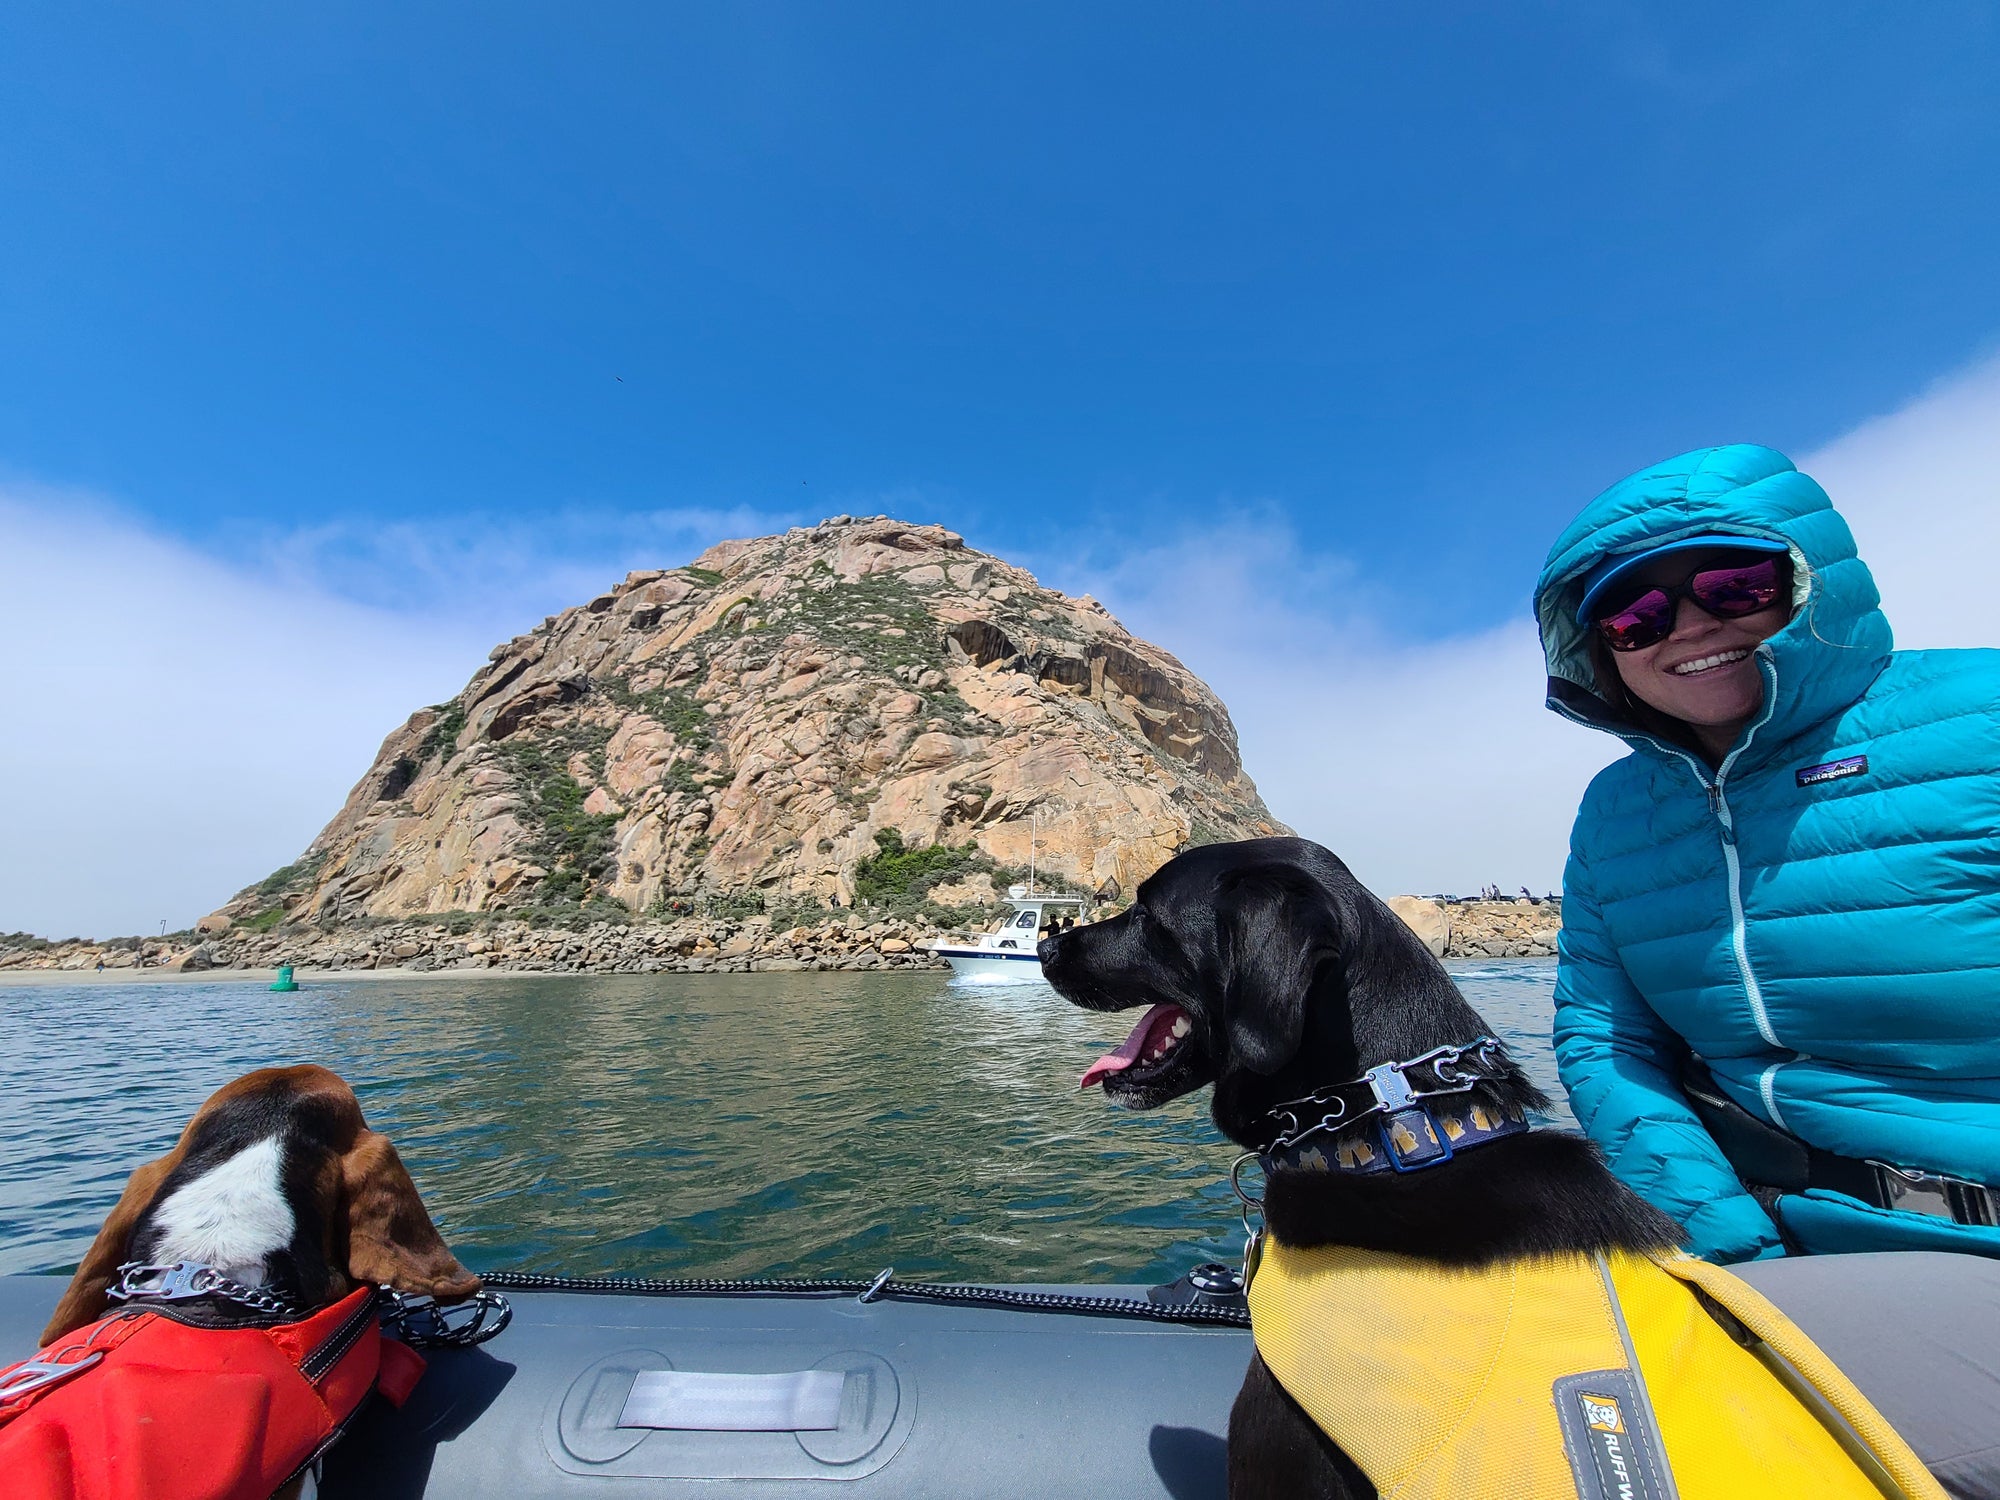 True Kit boats are dog friendly